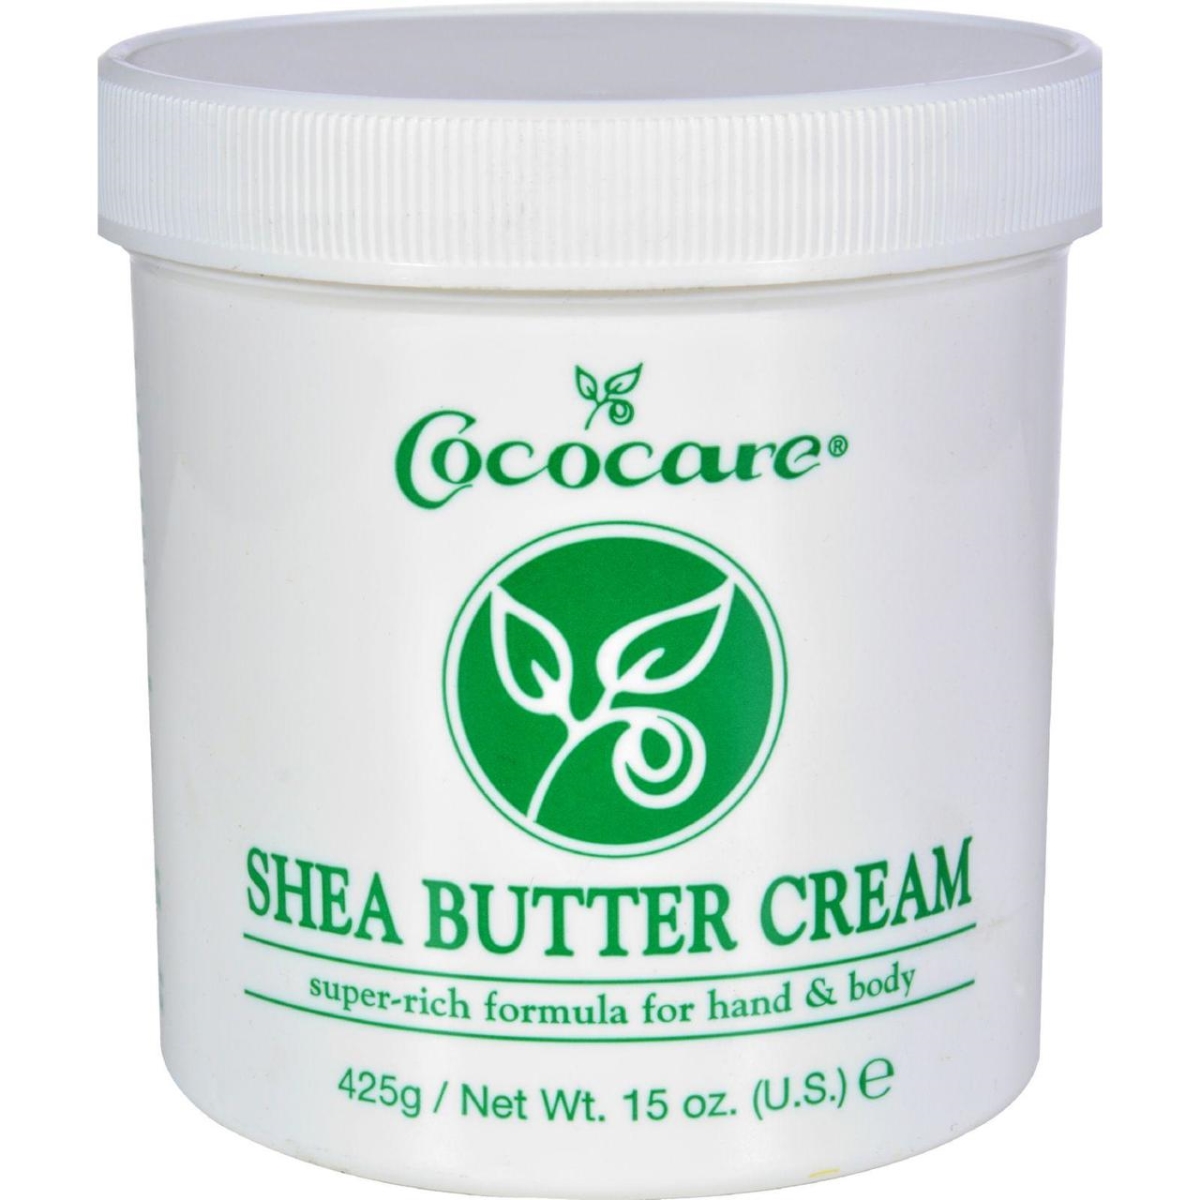 Hg0703108 15 Oz Shea Butter Cream